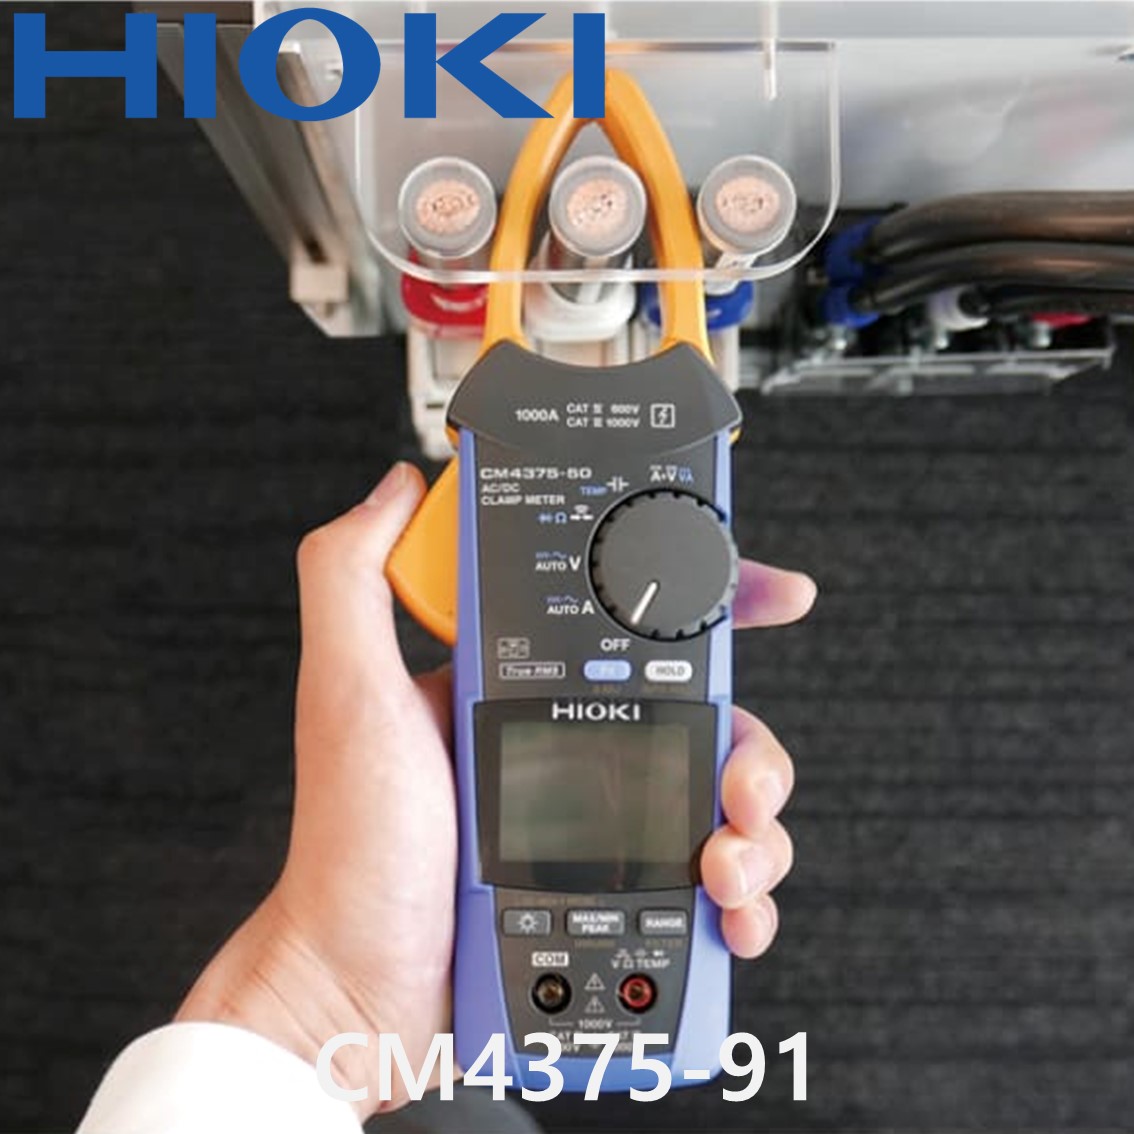 [ HIOKI ] CM4375-91 1000A, AC/DC 클램프미터 ,직류 고전압 프로브 P2000 세트